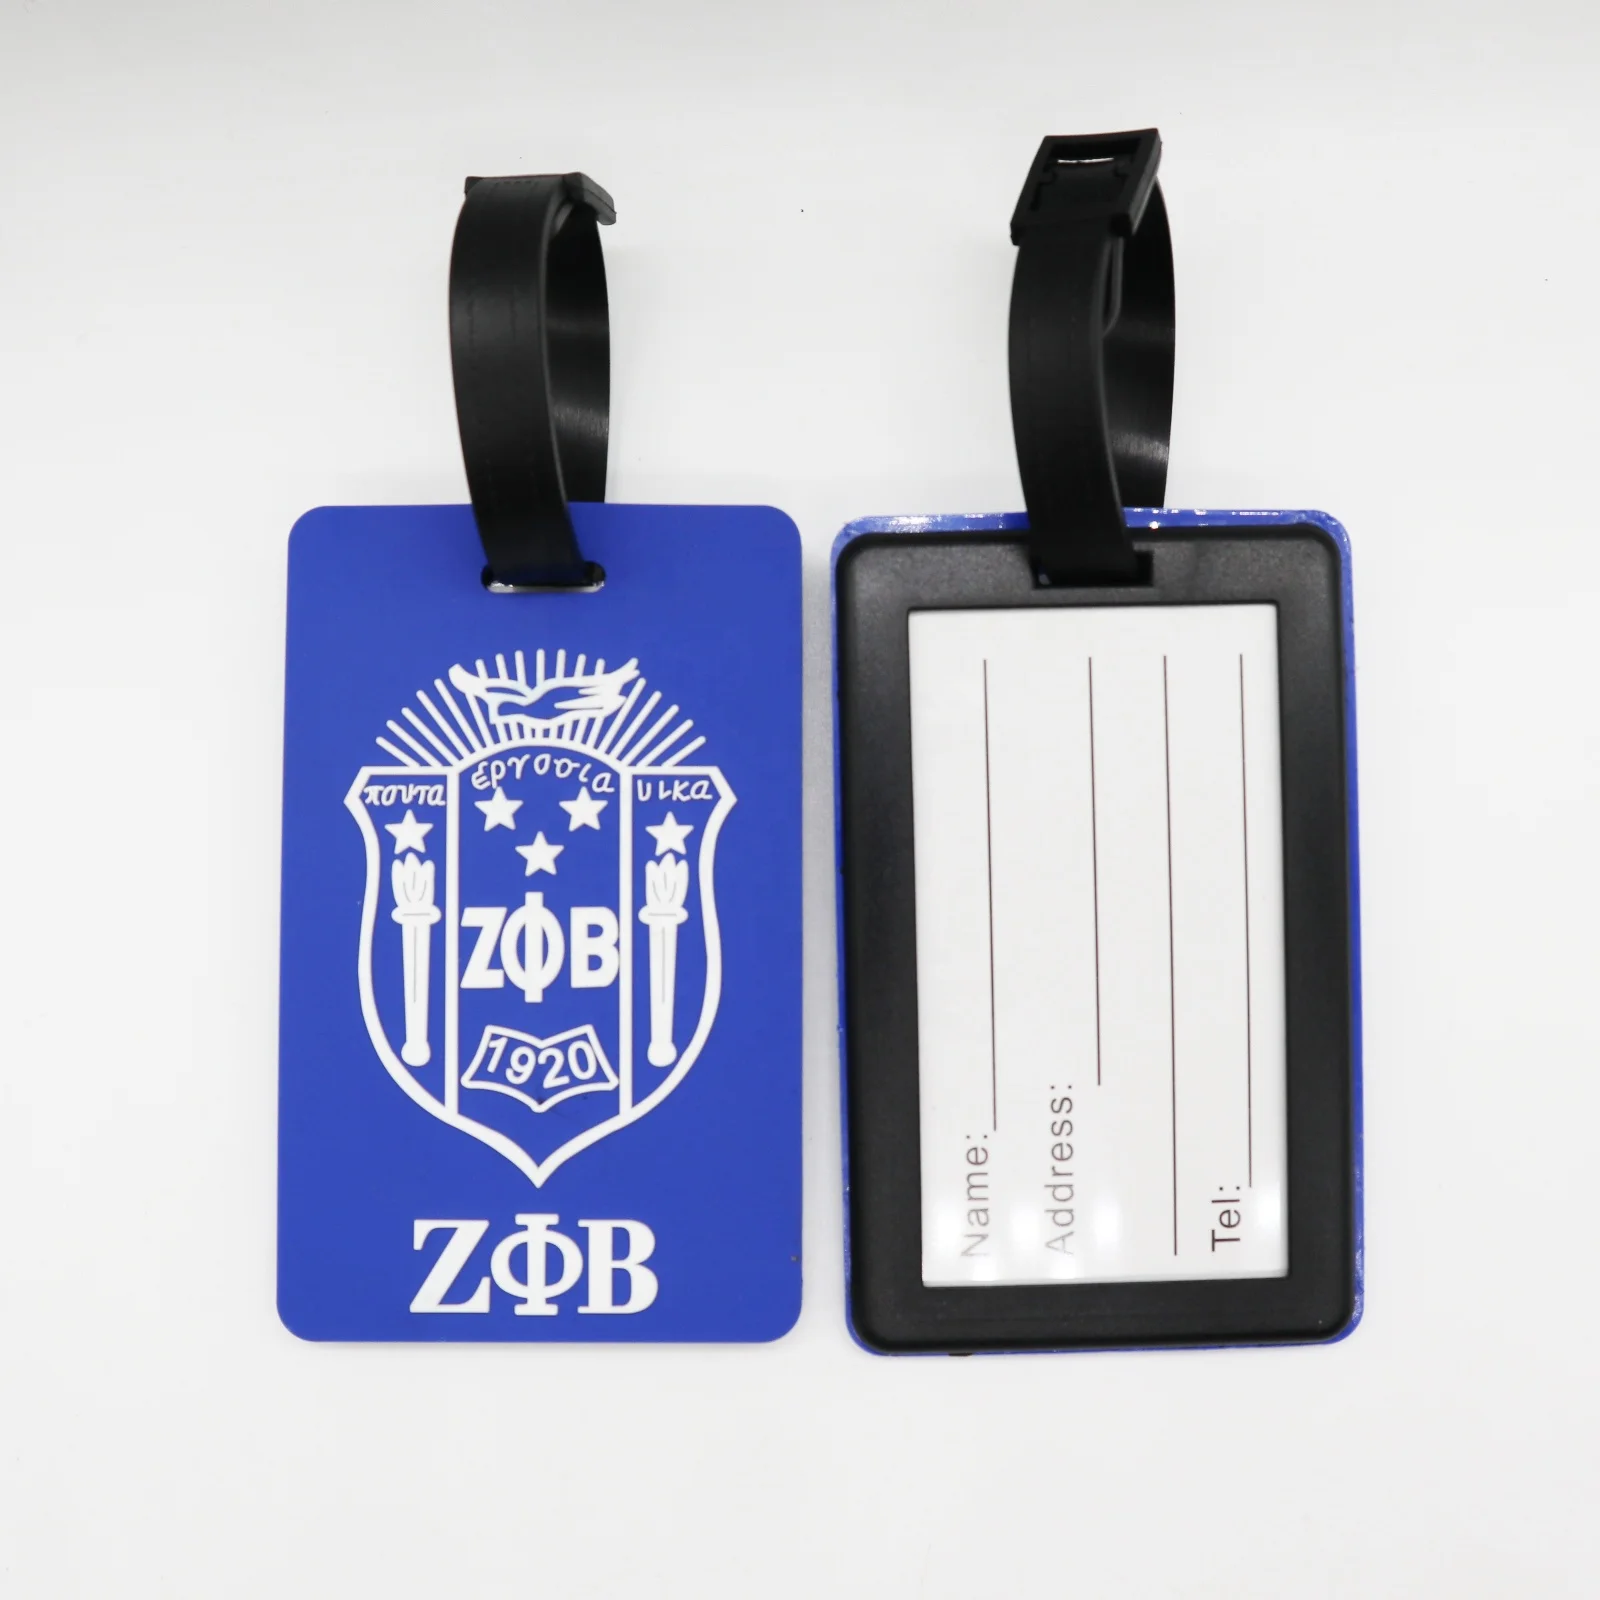 

2020 NEW Arrival Blue ZETA PHI BETA Shield Luggage Tag for 100 Years of Zeta Phi Beta, Pantone color